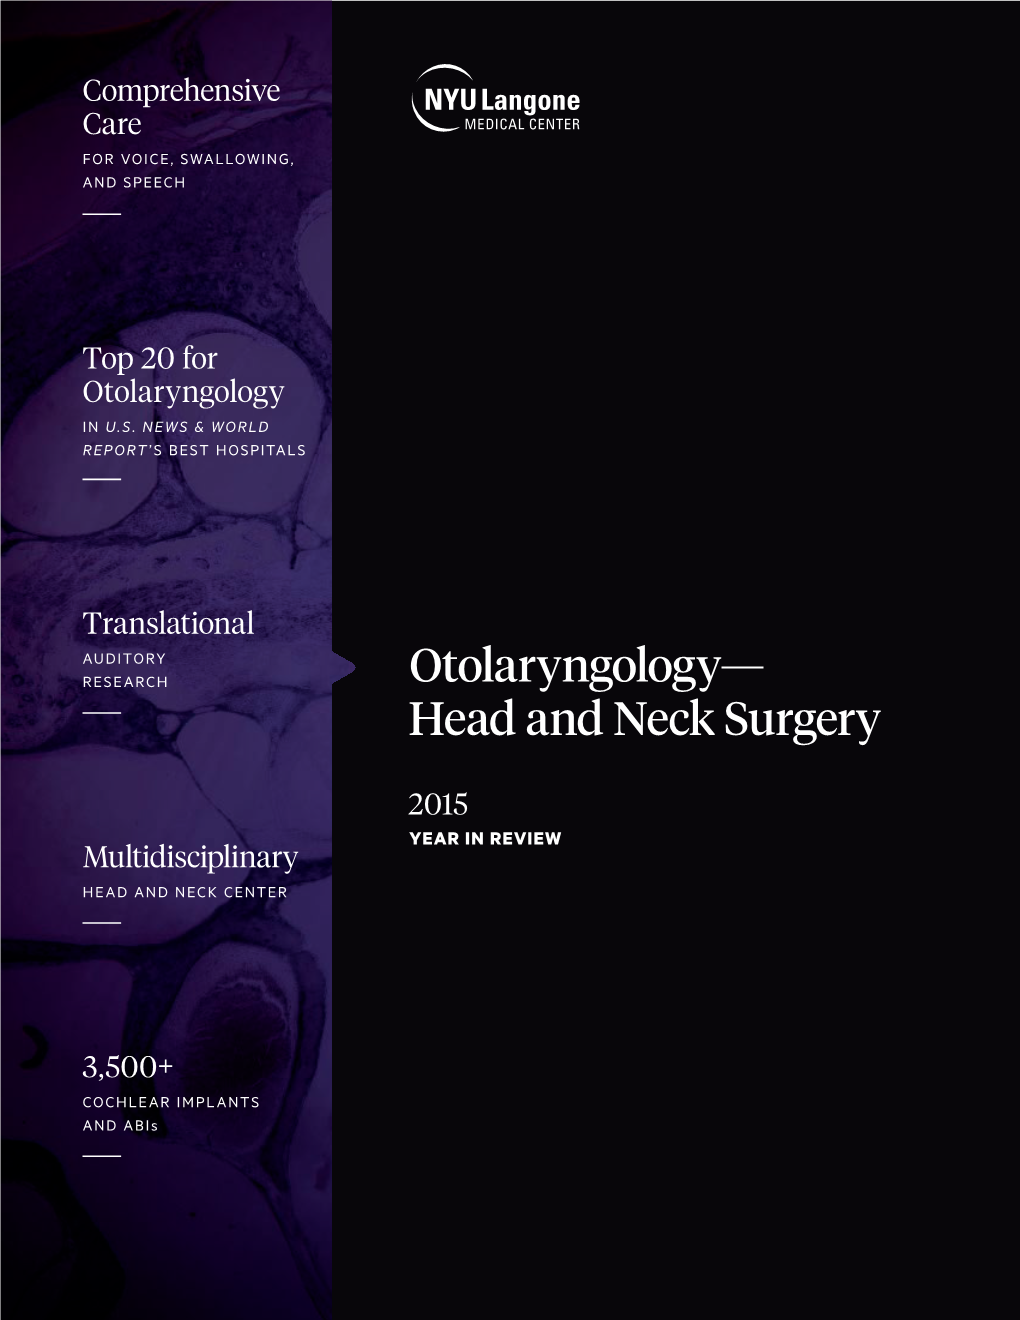 Otolaryngology— Head and Neck Surgery